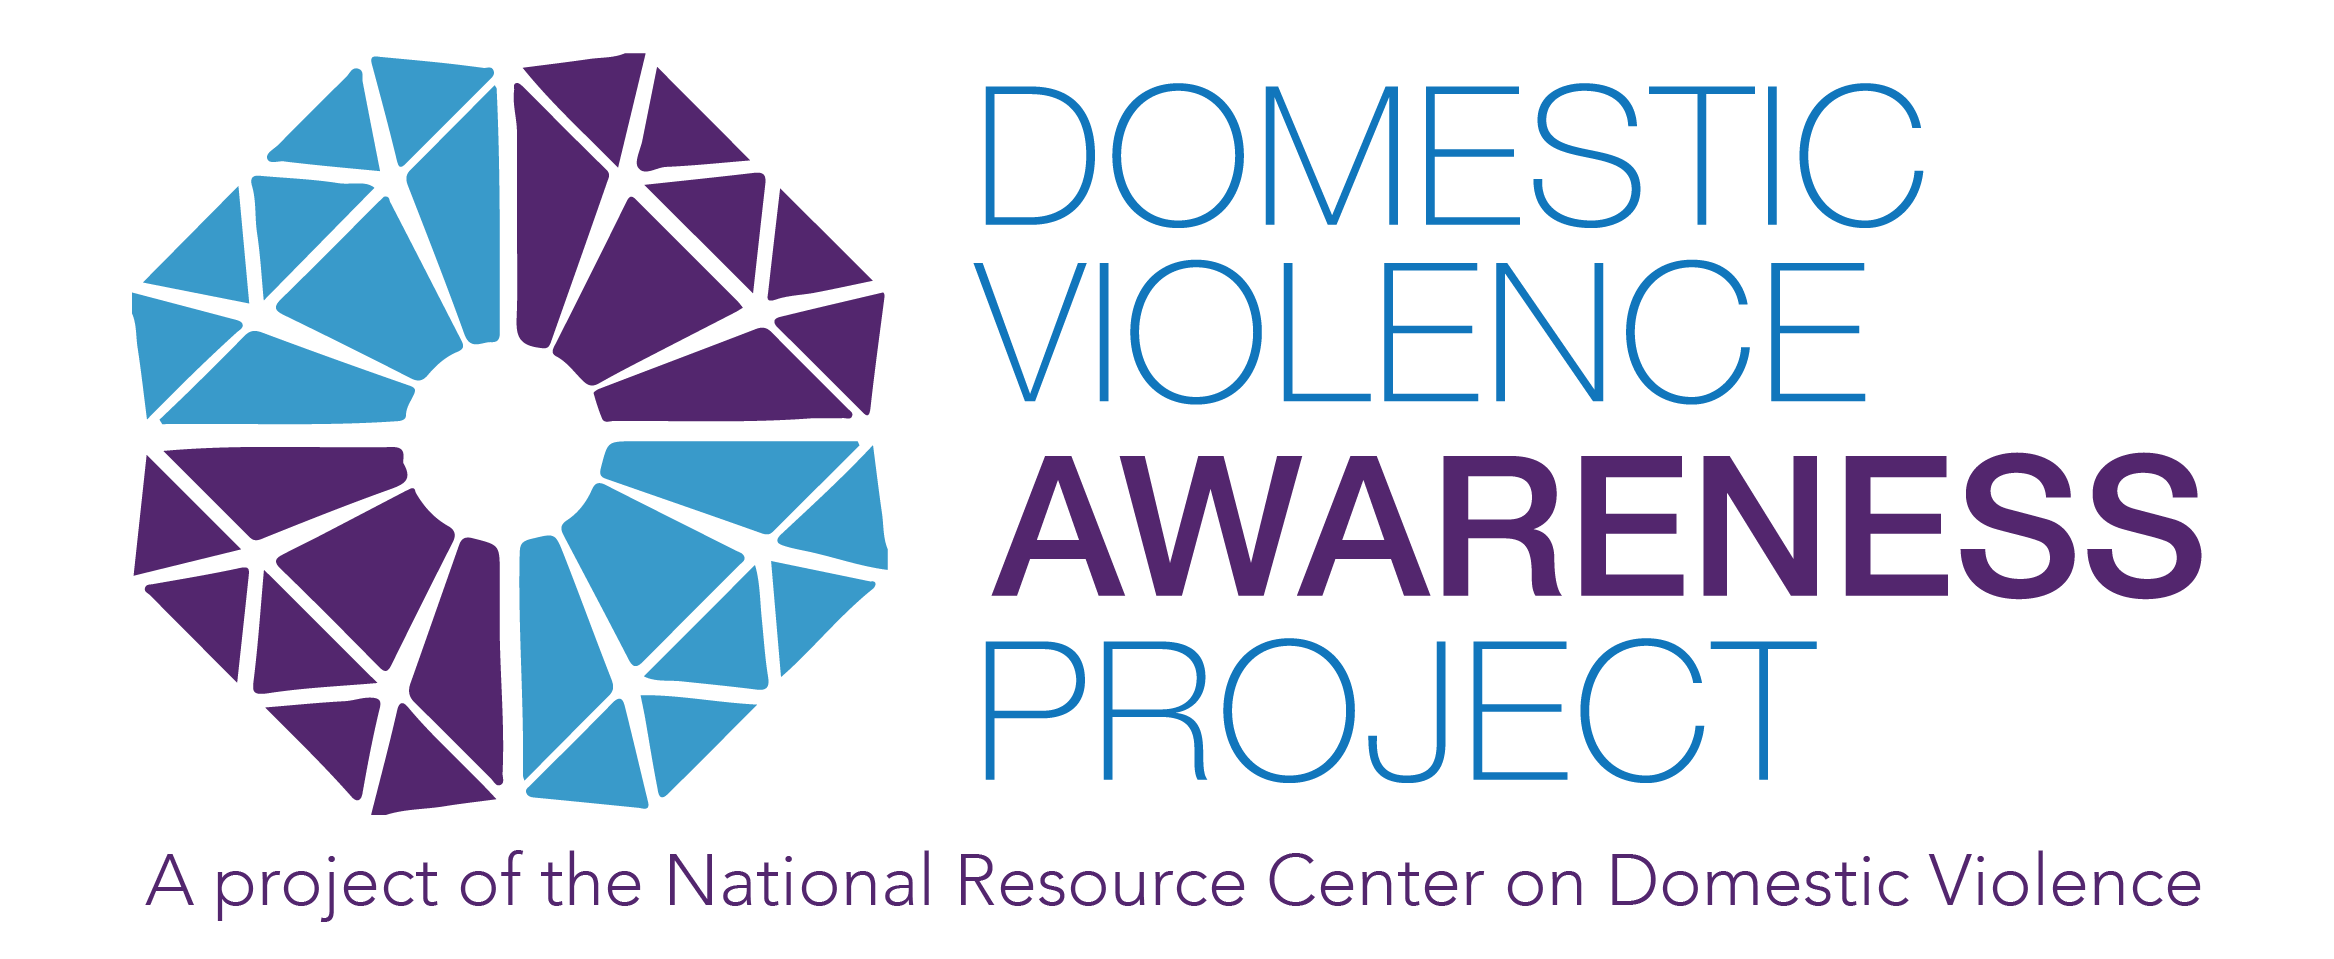 Domestic Violence Awareness Project logo